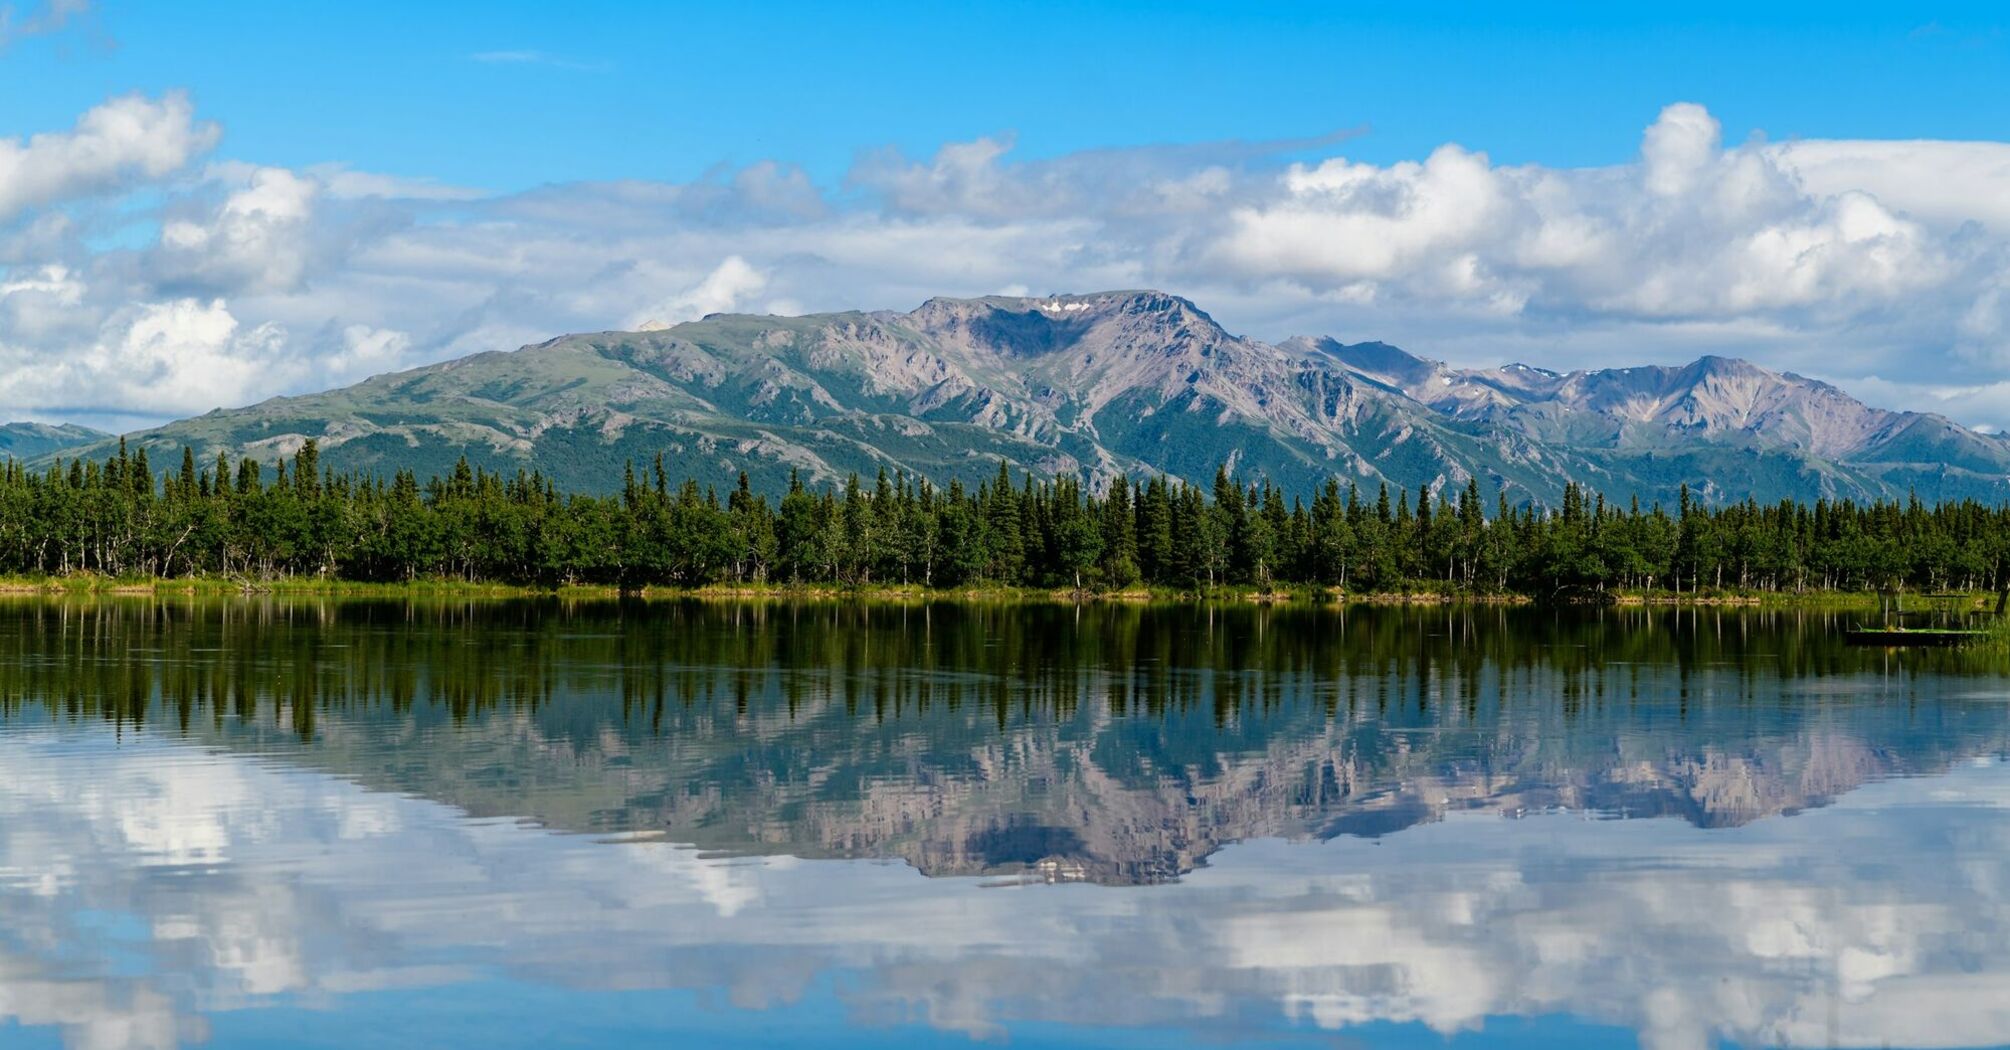 Alaskan mountains reflected in lake's water